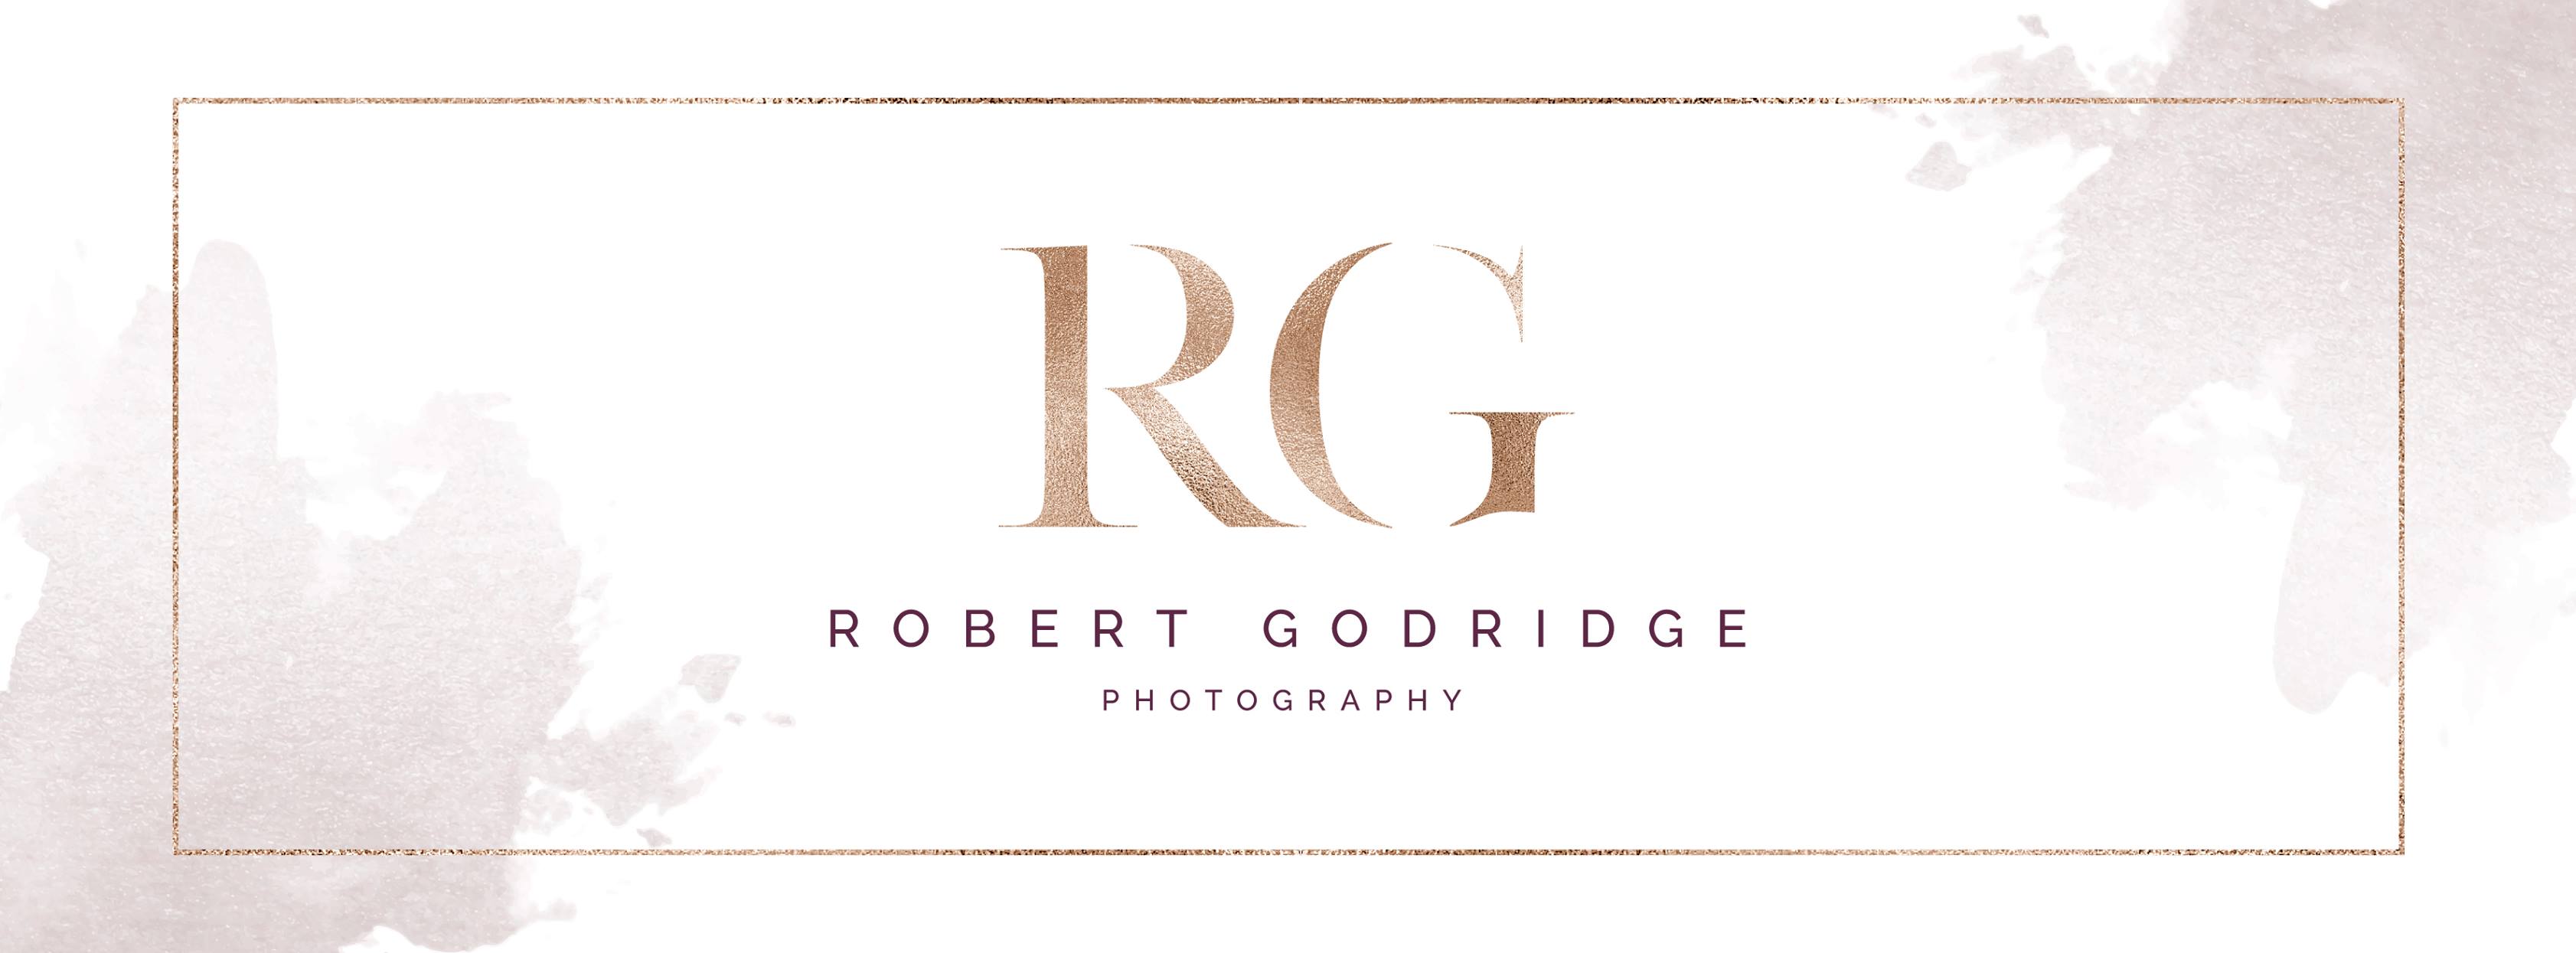 Company logo of Robert Godridge Photography